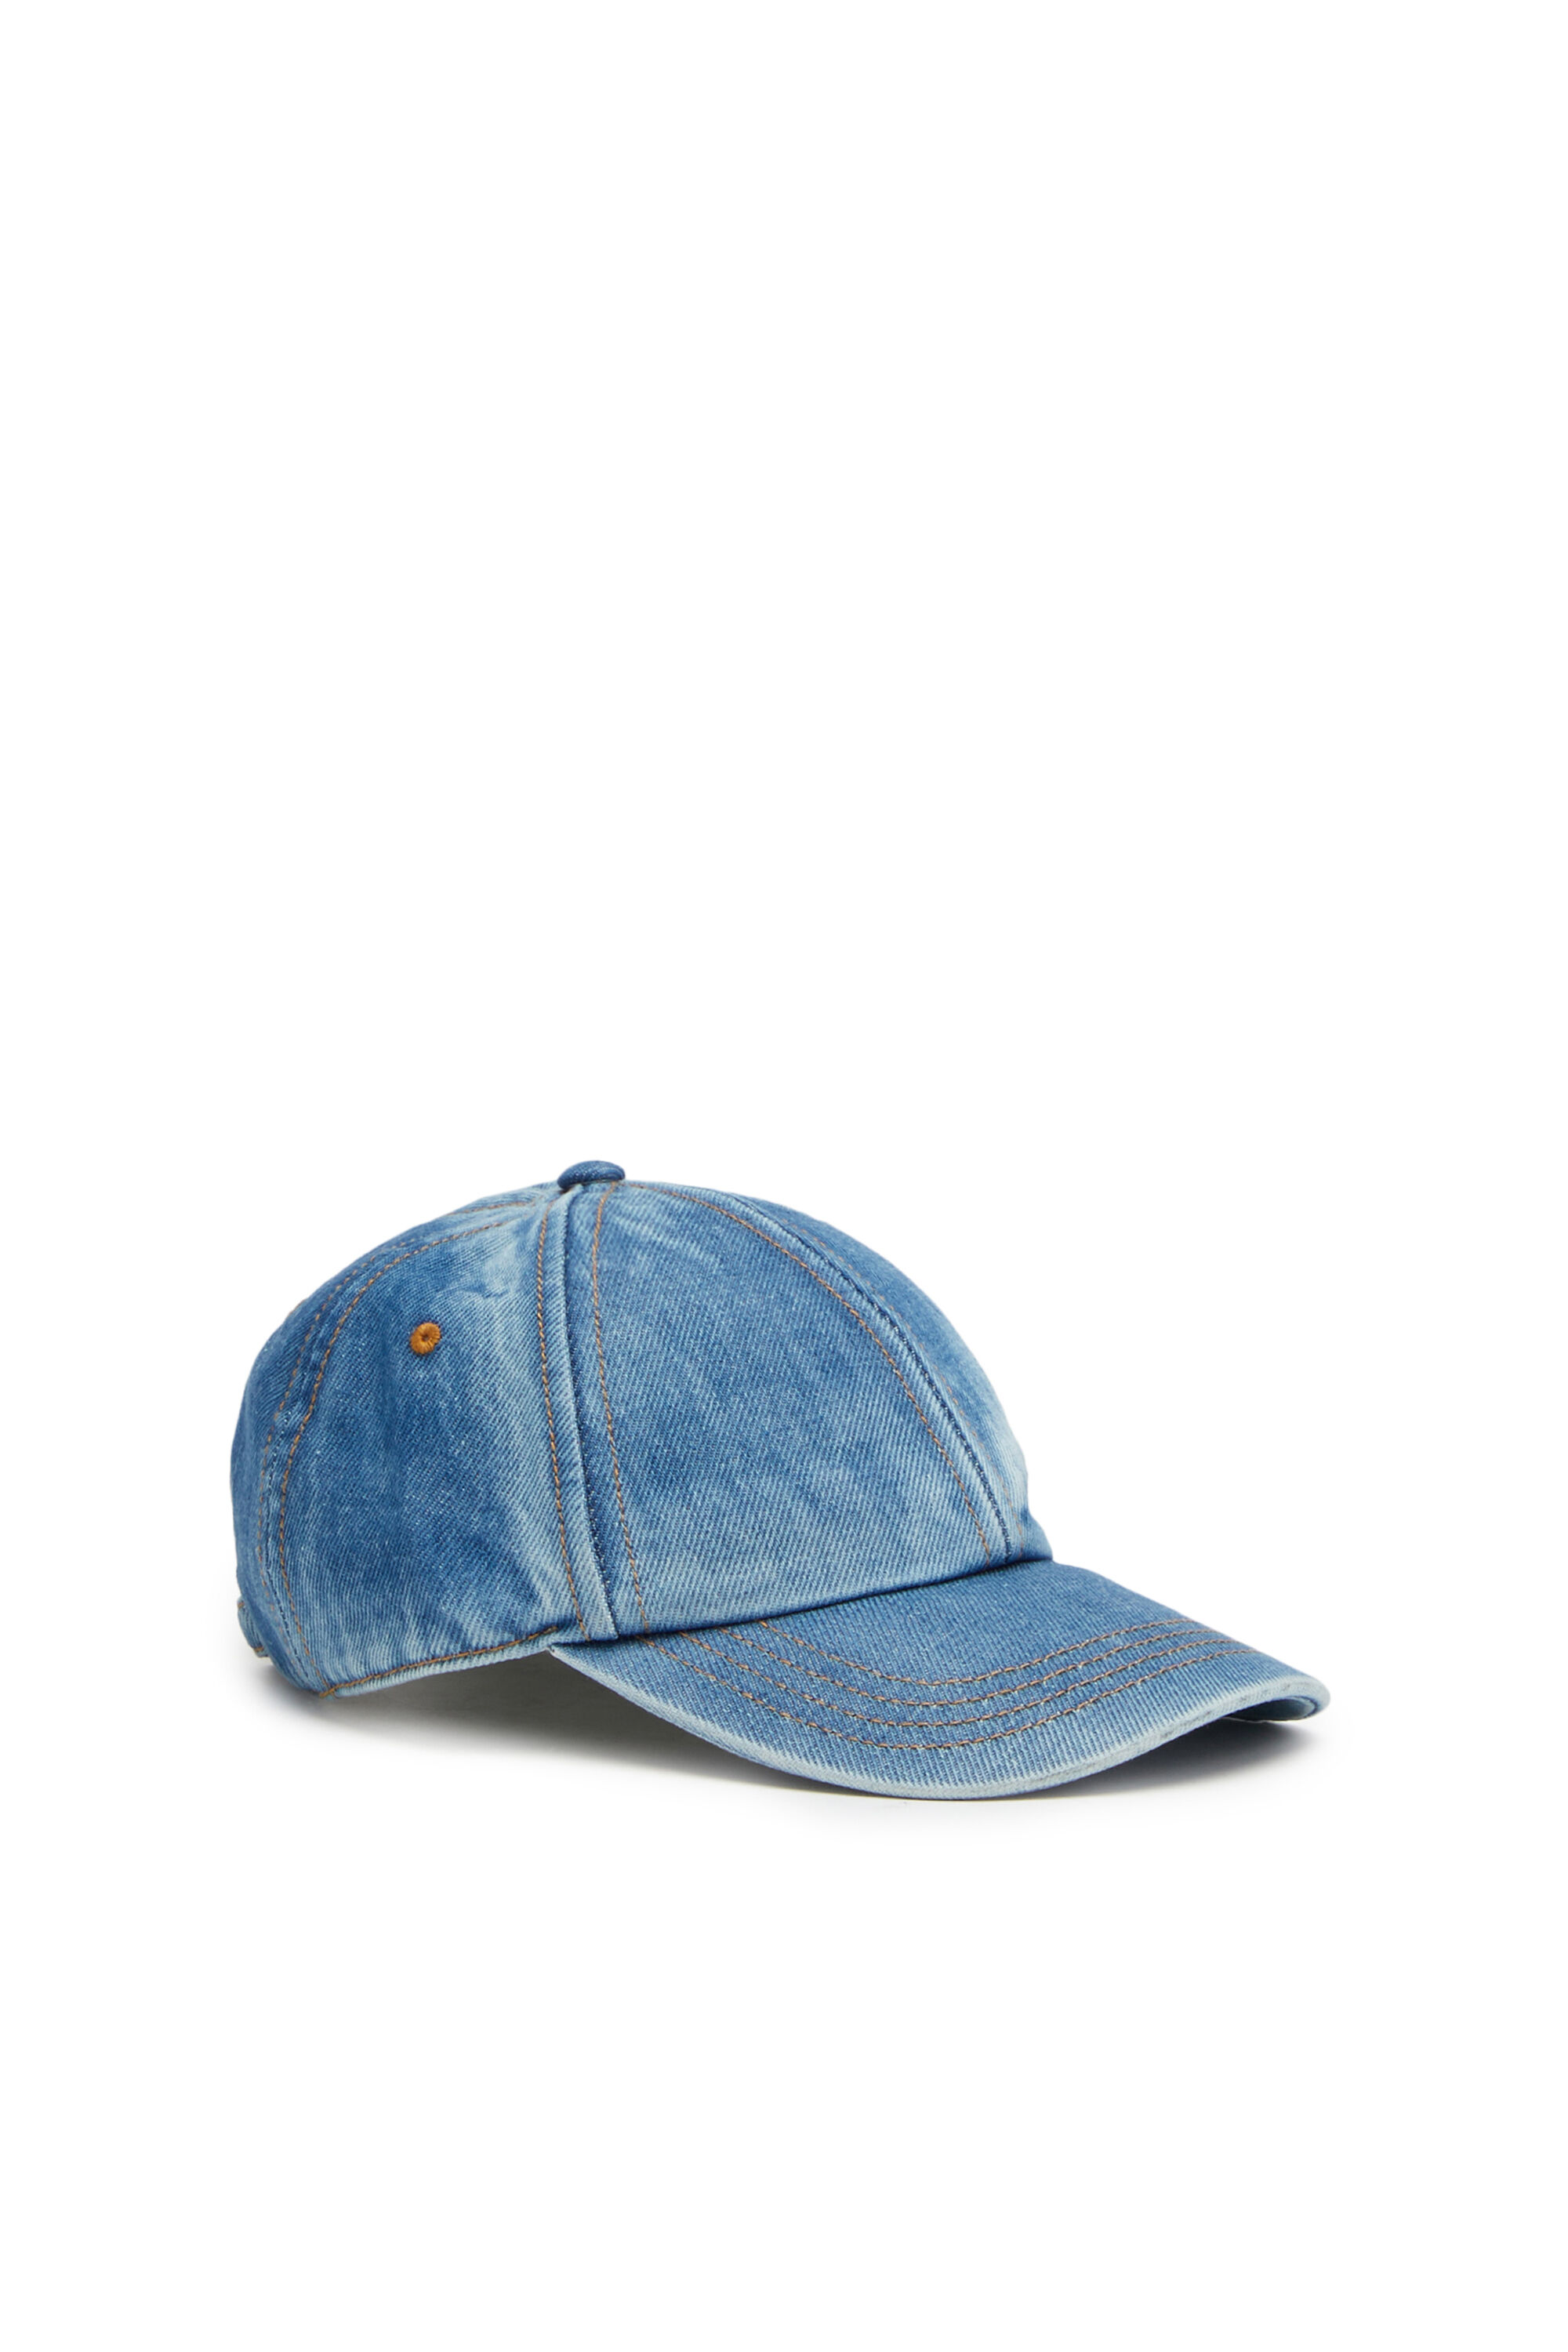 C-LIB-2 Man: Baseball cap in mid blue cotton denim